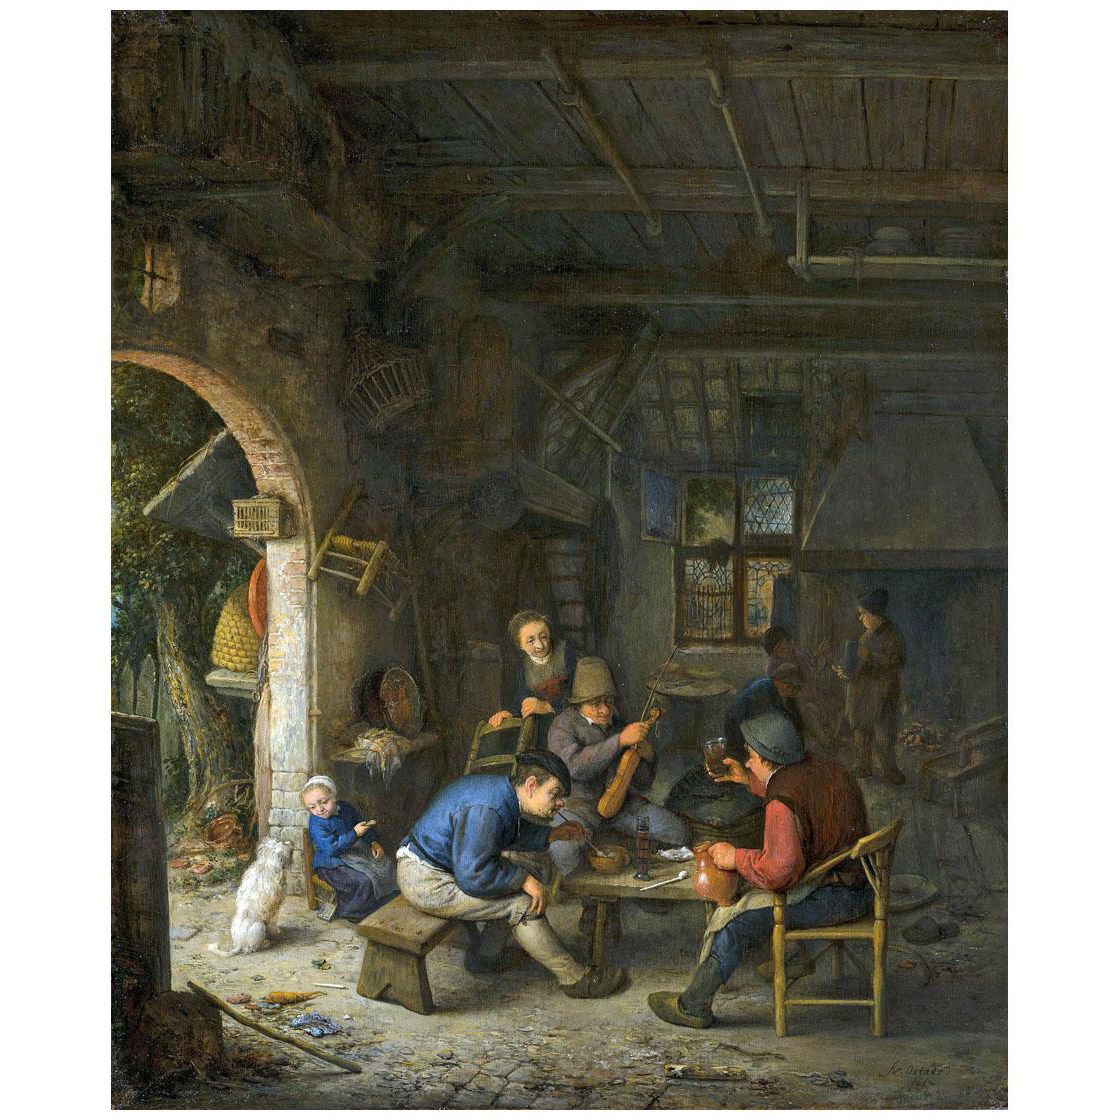 Adriaen van Ostade. Peasants in an Inn. 1662. Mauritshuis Den Haag